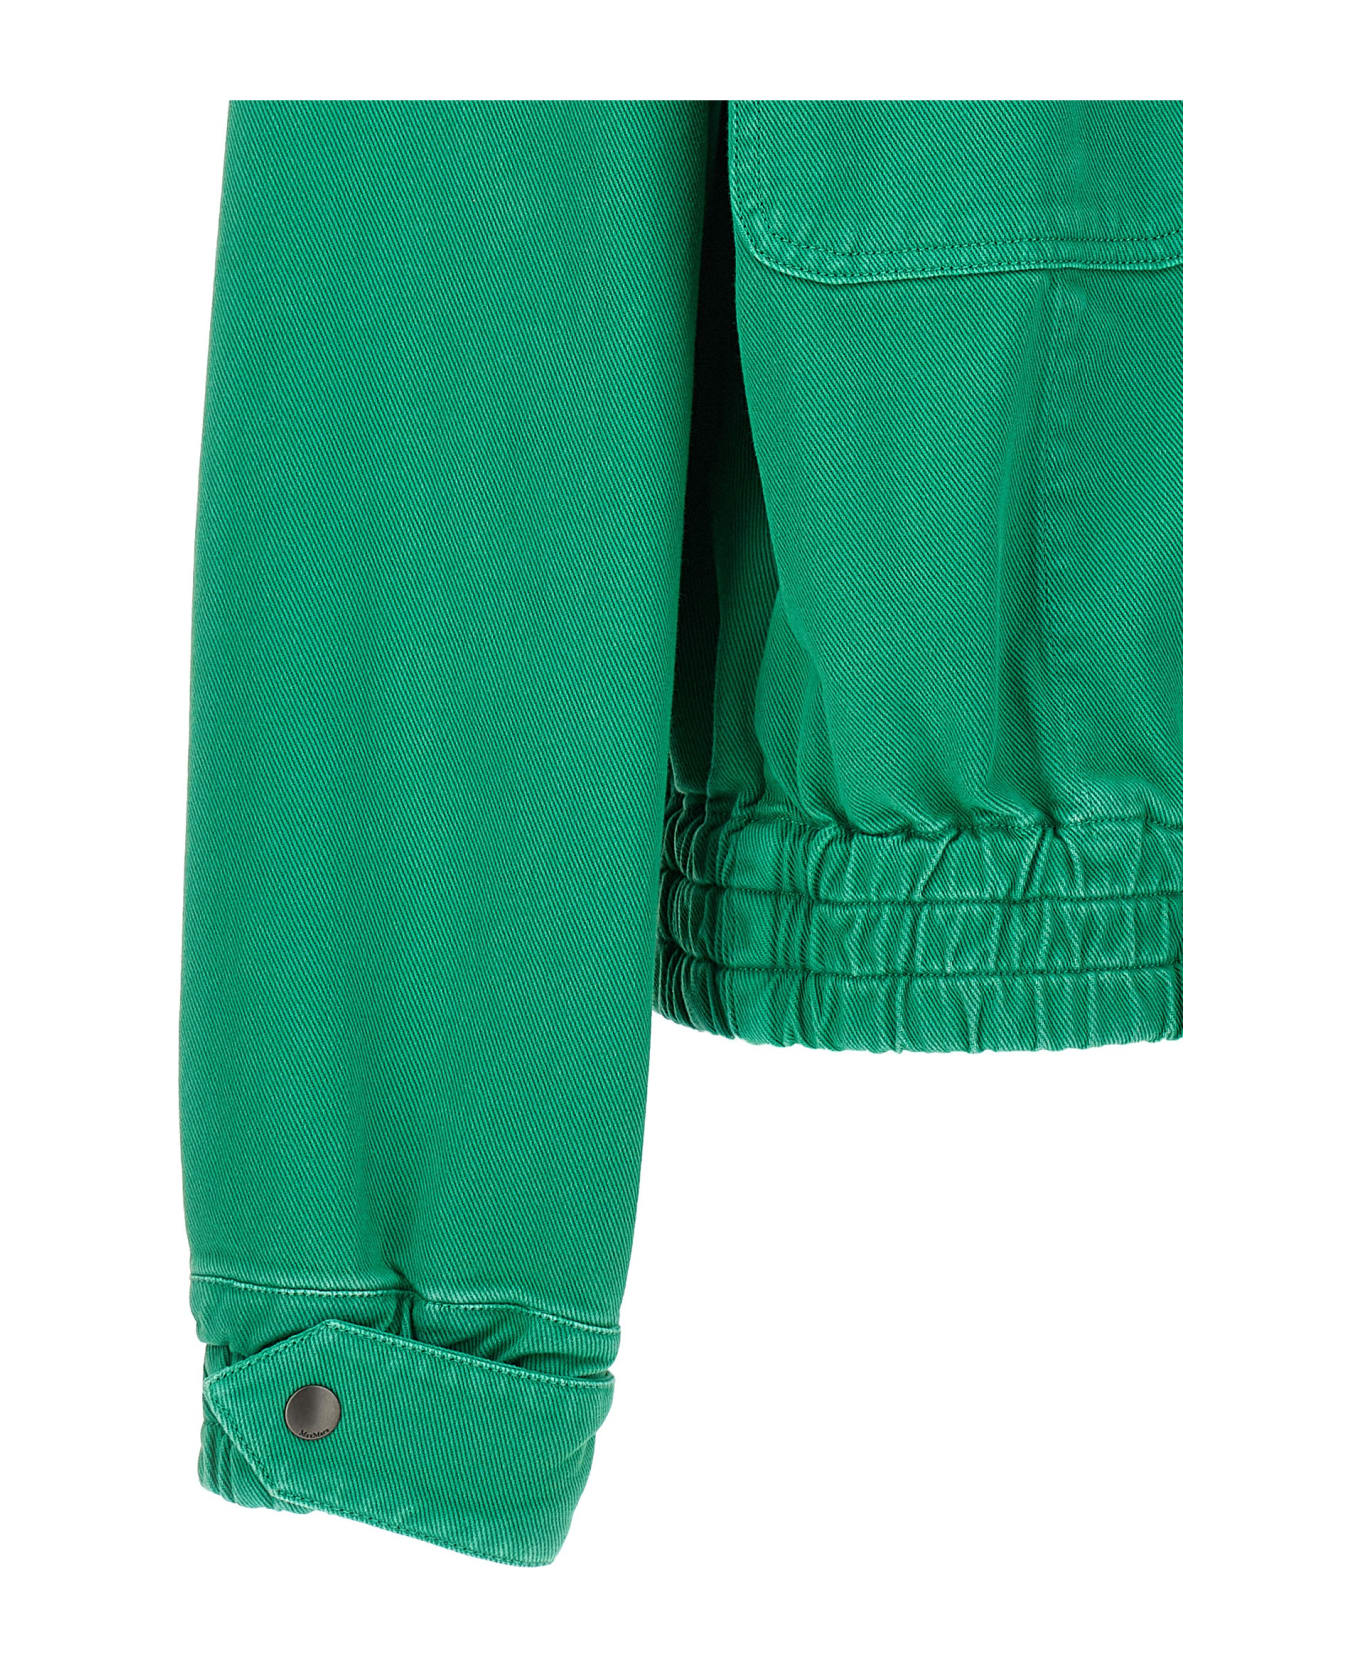 Max Mara 'arturo' Crop Jacket - Green